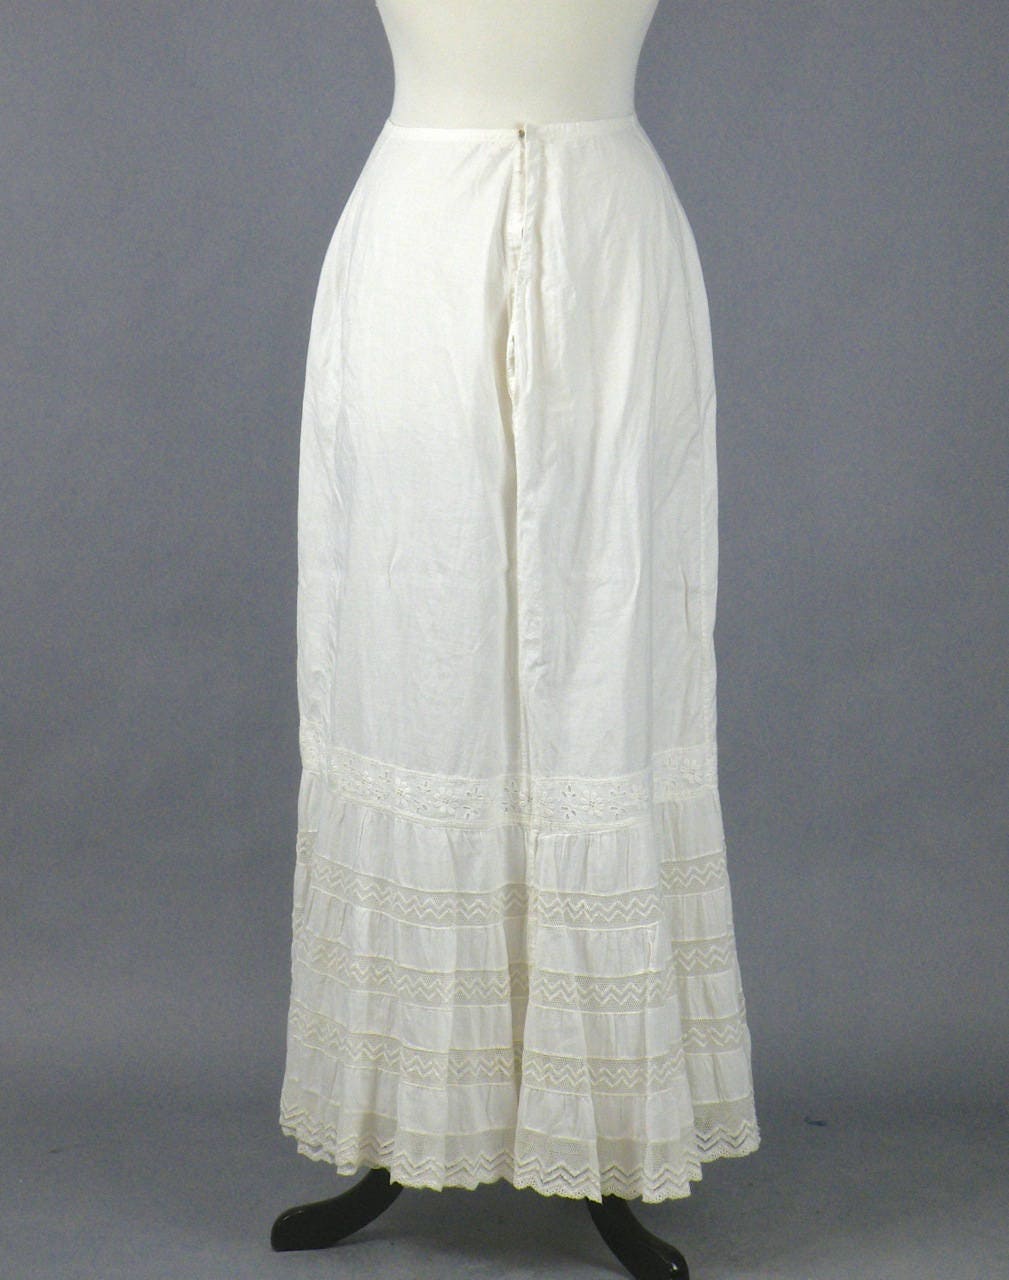 Antique Edwardian Petticoat, 1910s White Cotton and Lace Skirt Slip ...